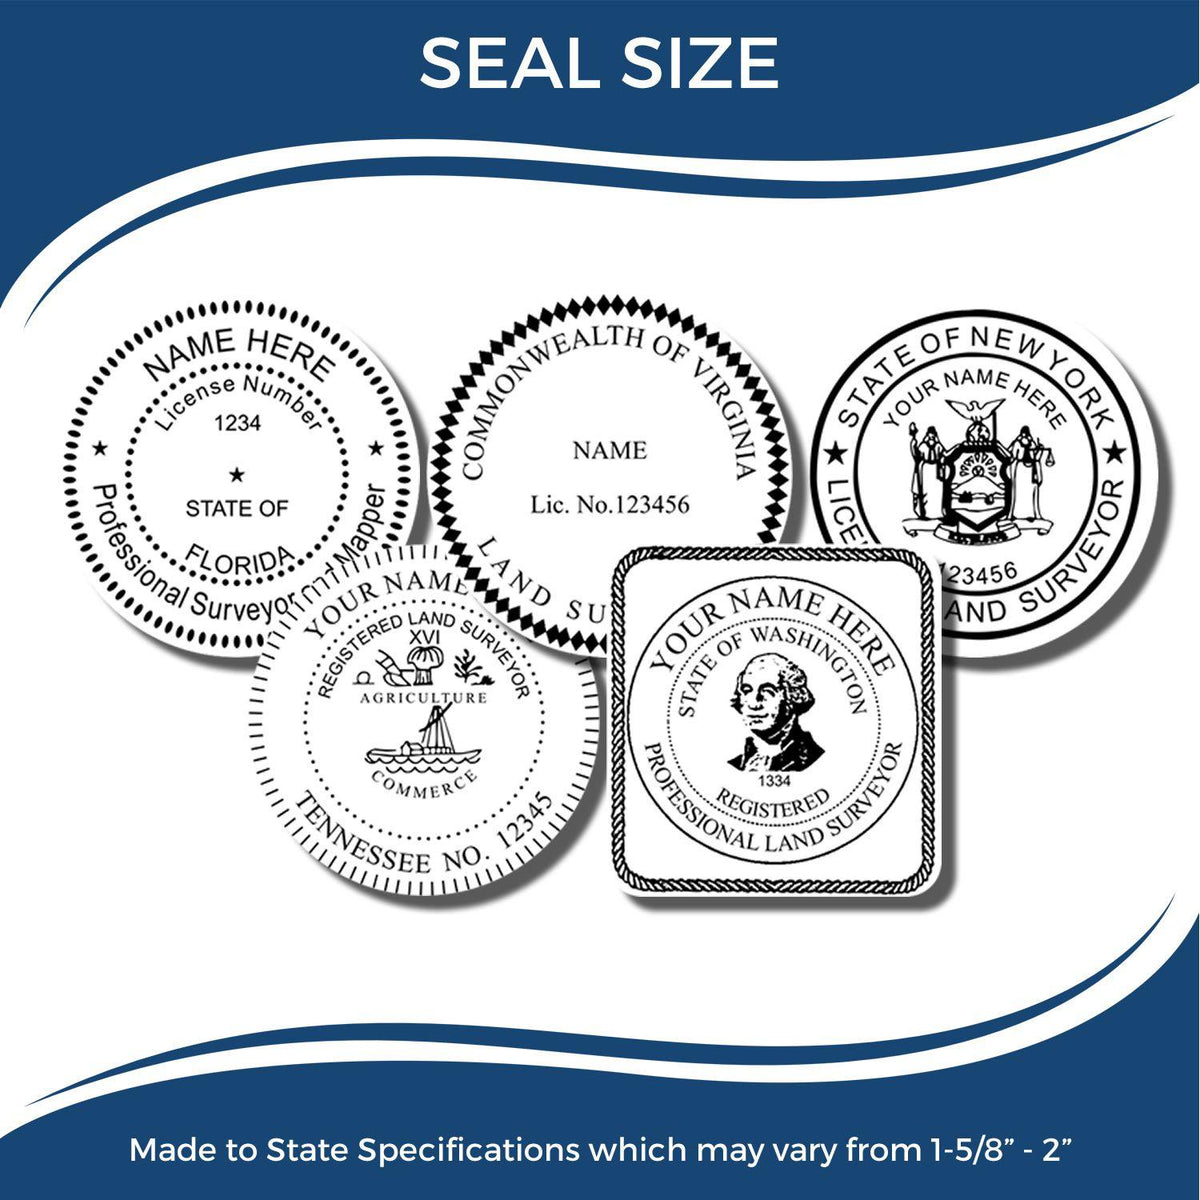 Land Surveyor Soft Seal Embosser - Engineer Seal Stamps - Embosser Type_Handheld, Embosser Type_Soft Seal, Type of Use_Professional